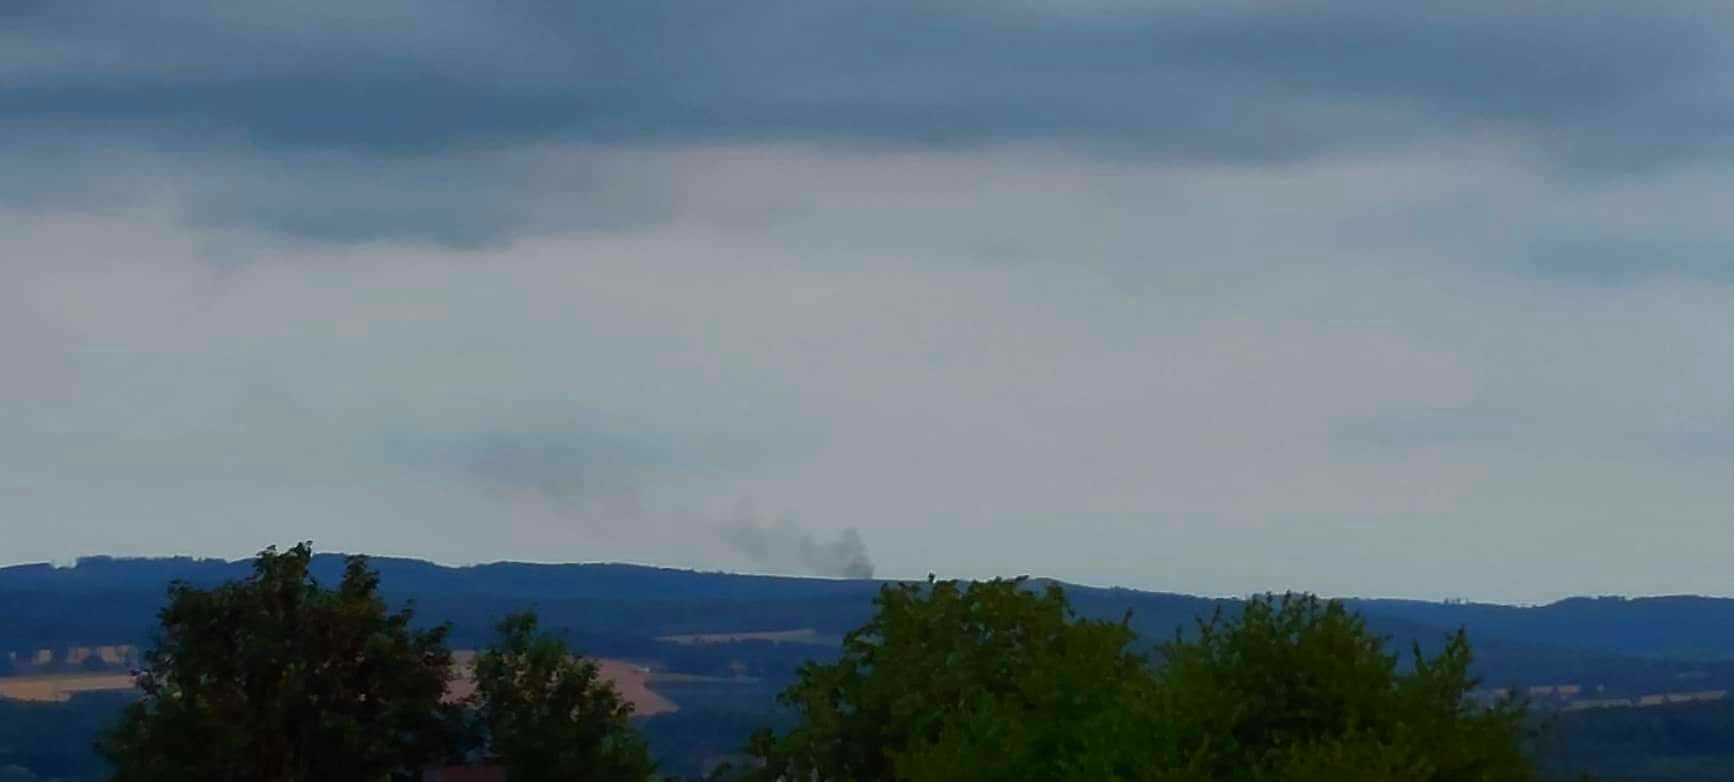 Großbrand in Iserlohn-Kesbern – Rauchsäule kilometerweit zu sehen